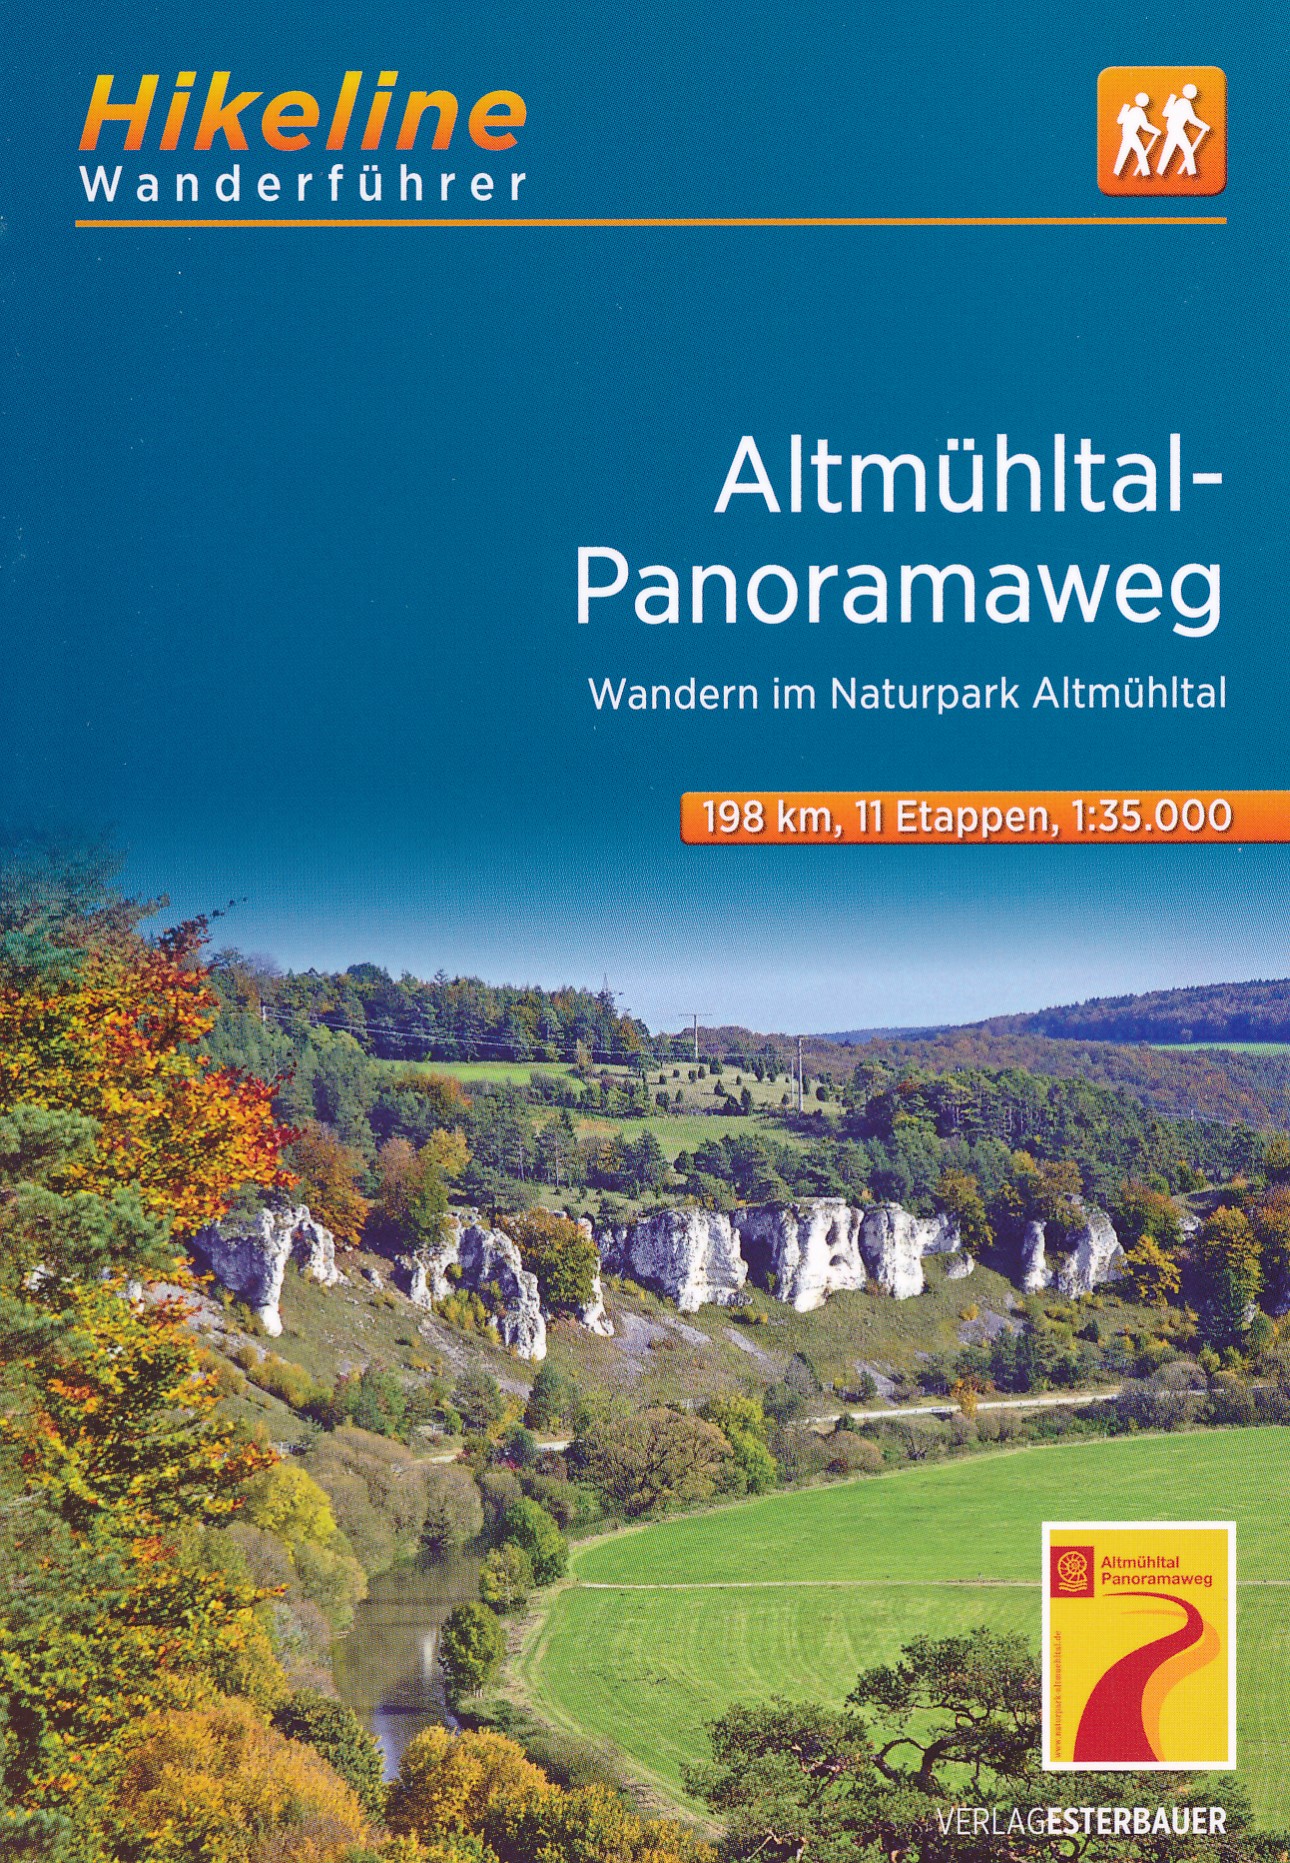 Online bestellen: Wandelgids Hikeline Altmühltal-Panoramaweg | Esterbauer